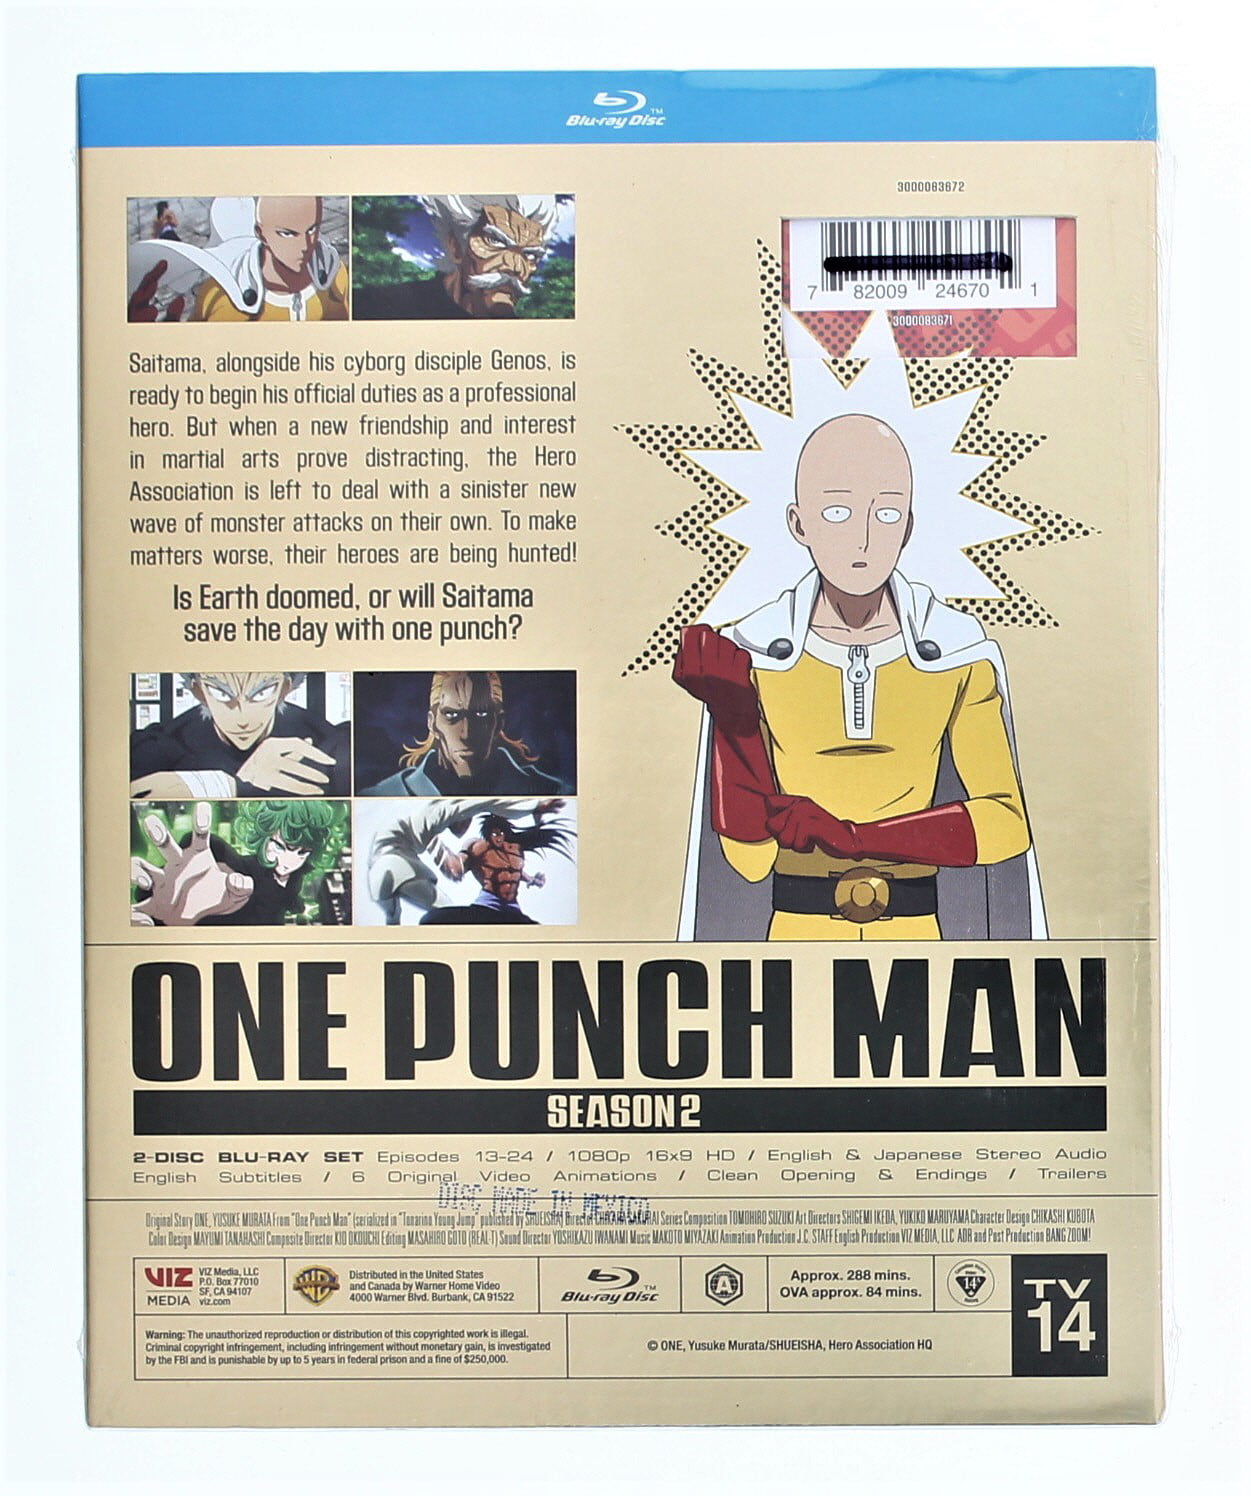 Watch One-Punch Man season 2 episode 2 streaming online